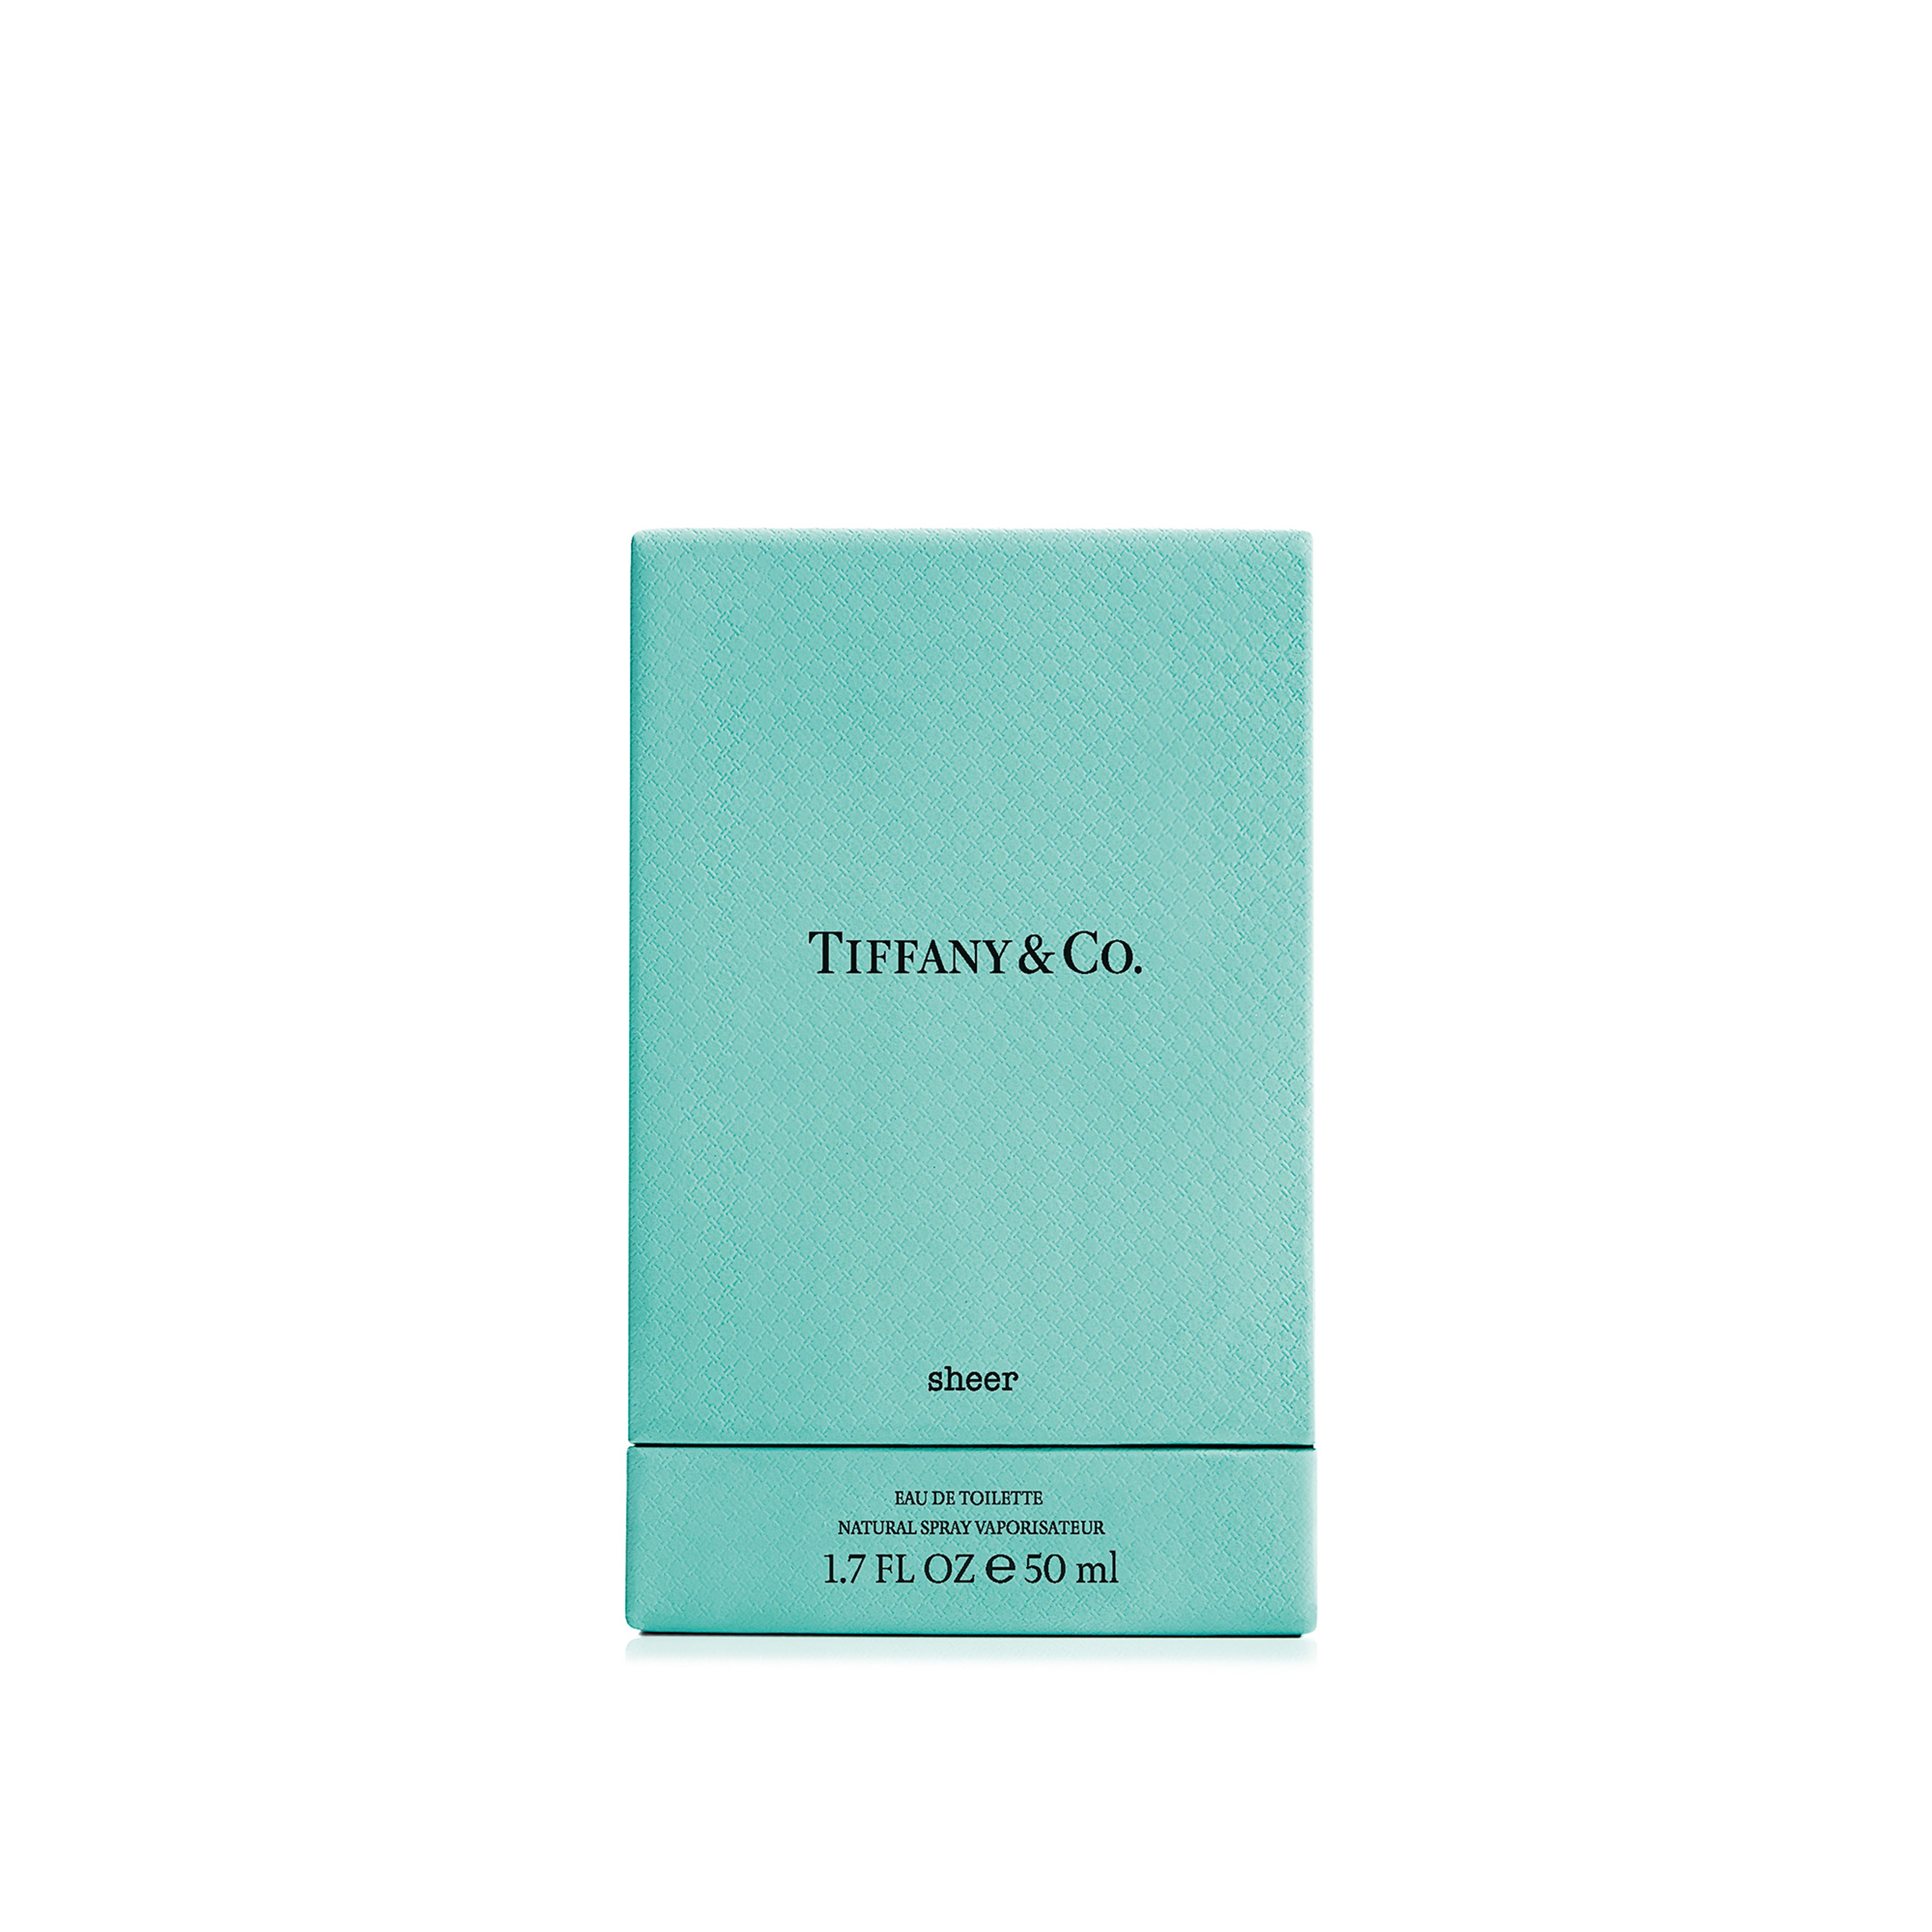 Tiffany Tiffany & Co. Sheer Eau De Toilette 4